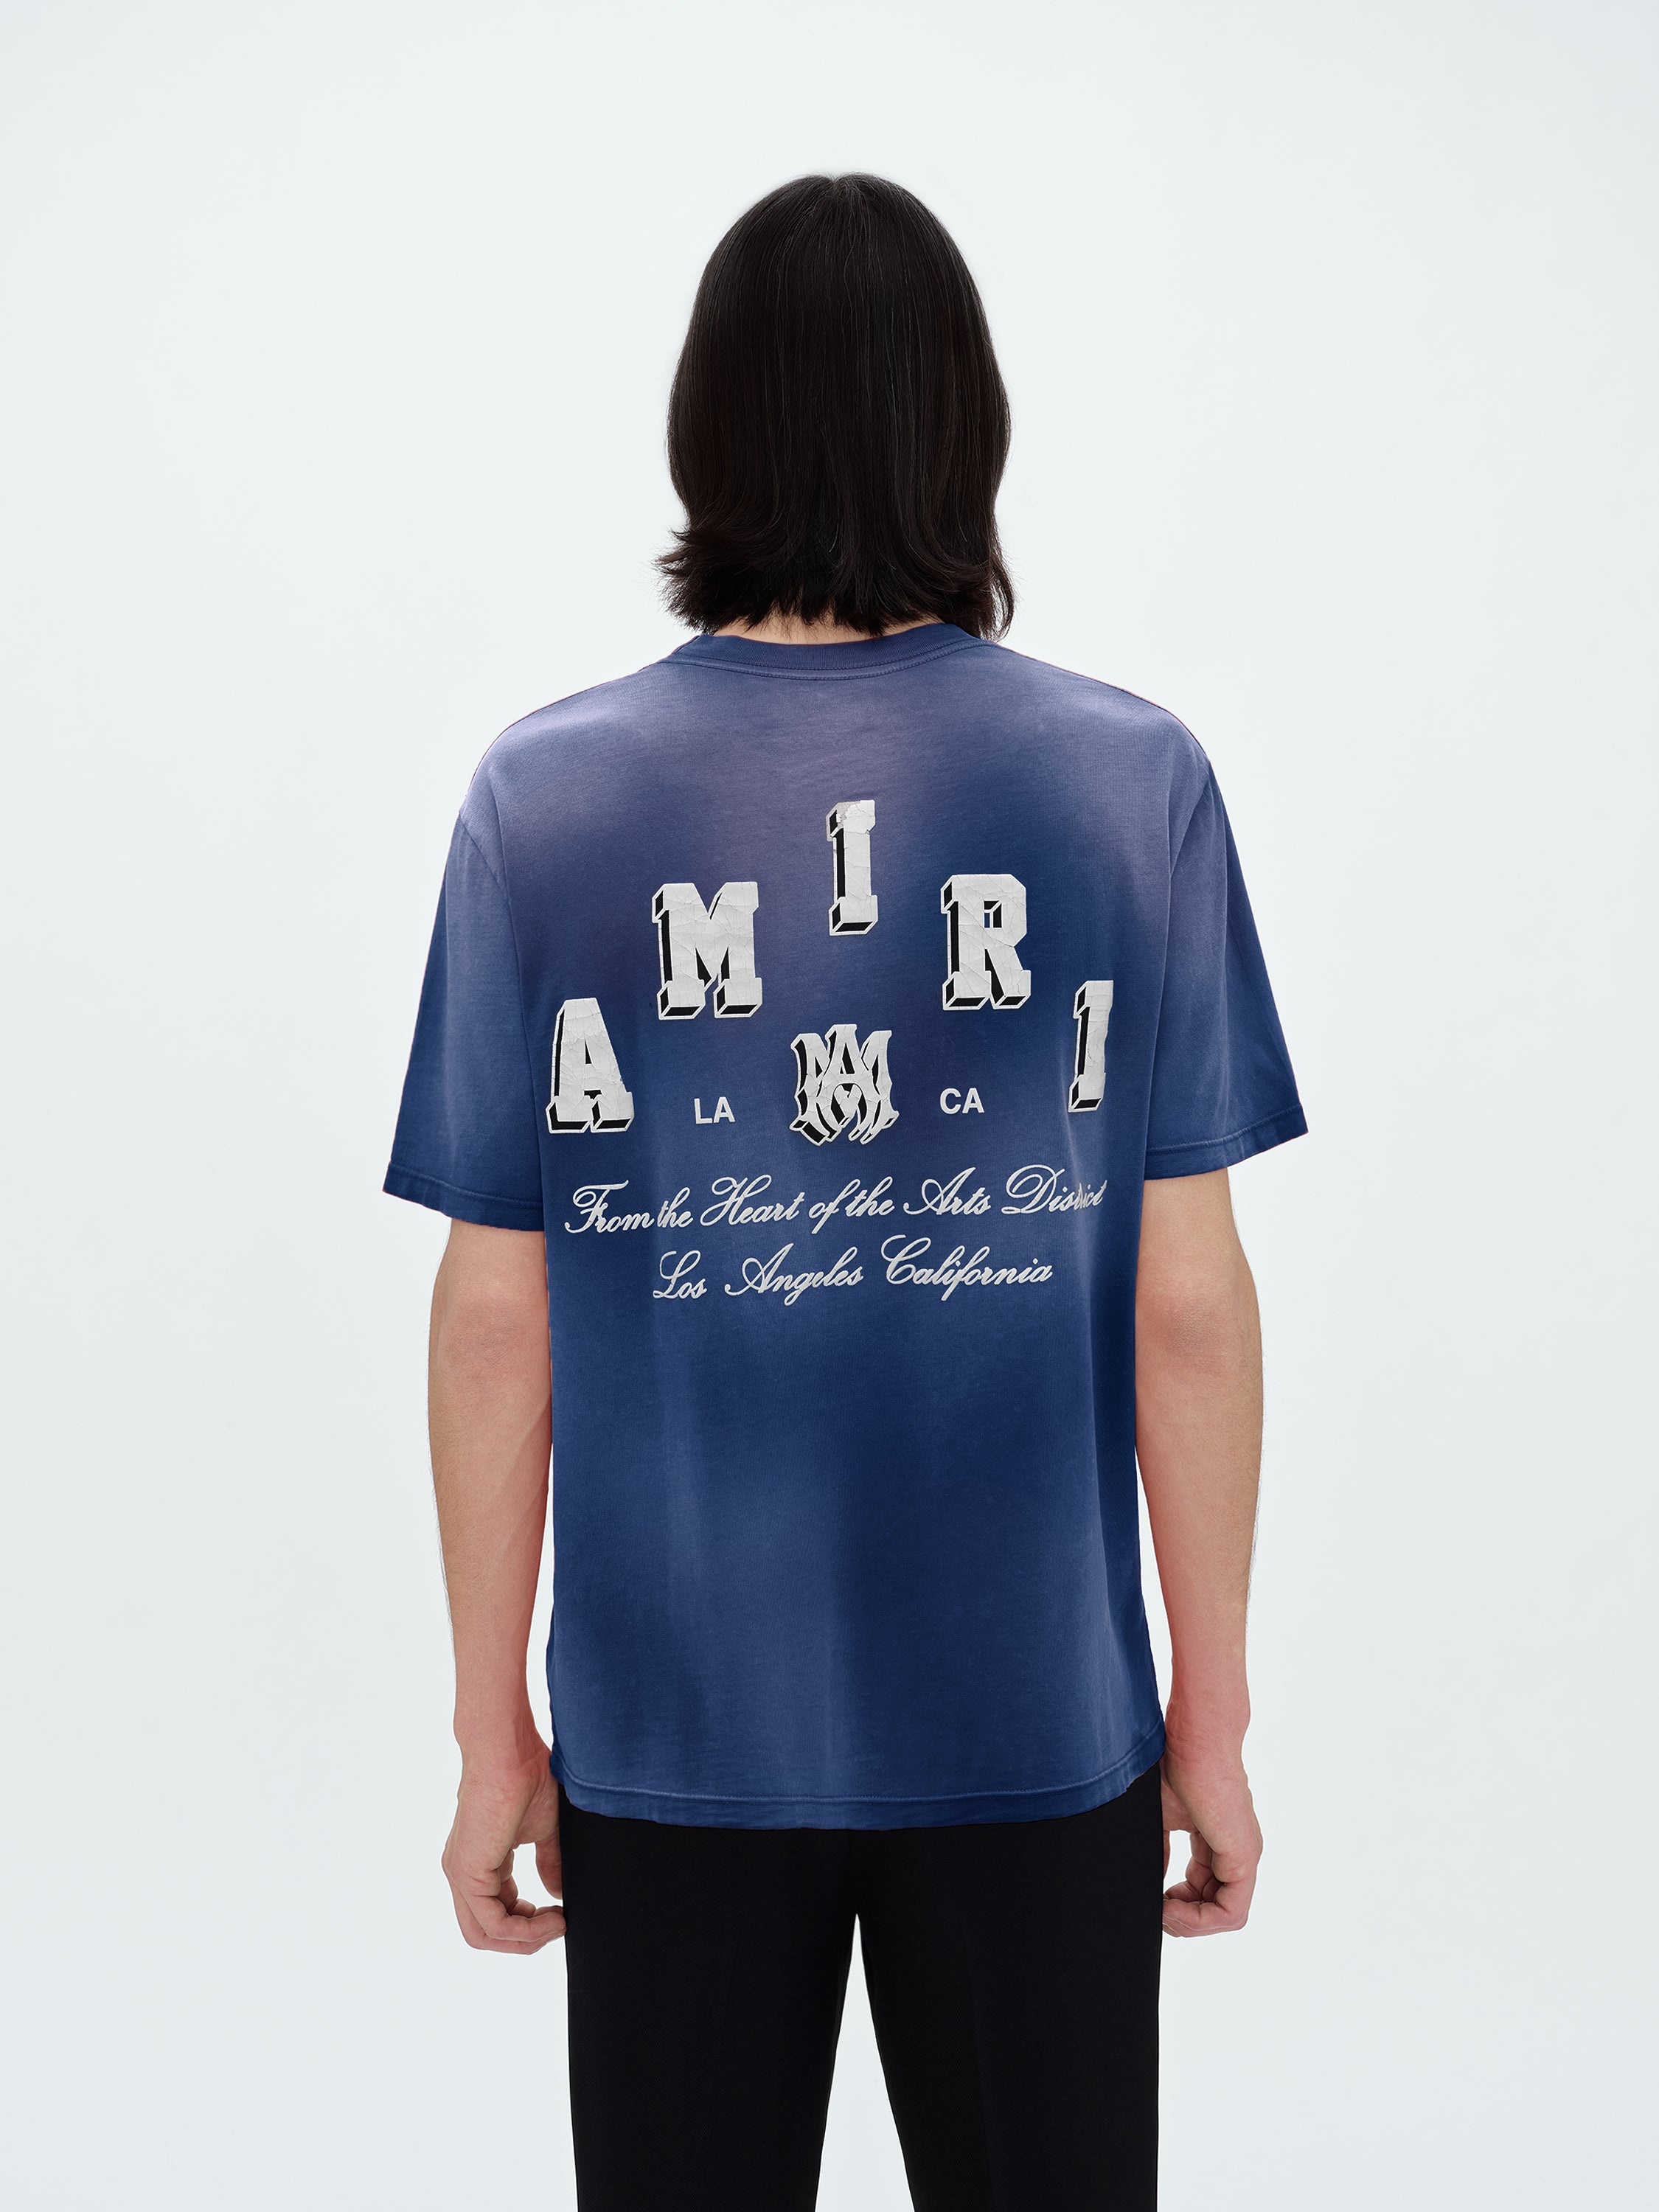 Amiri Vintage Collegiate Logo-Print T-Shirt